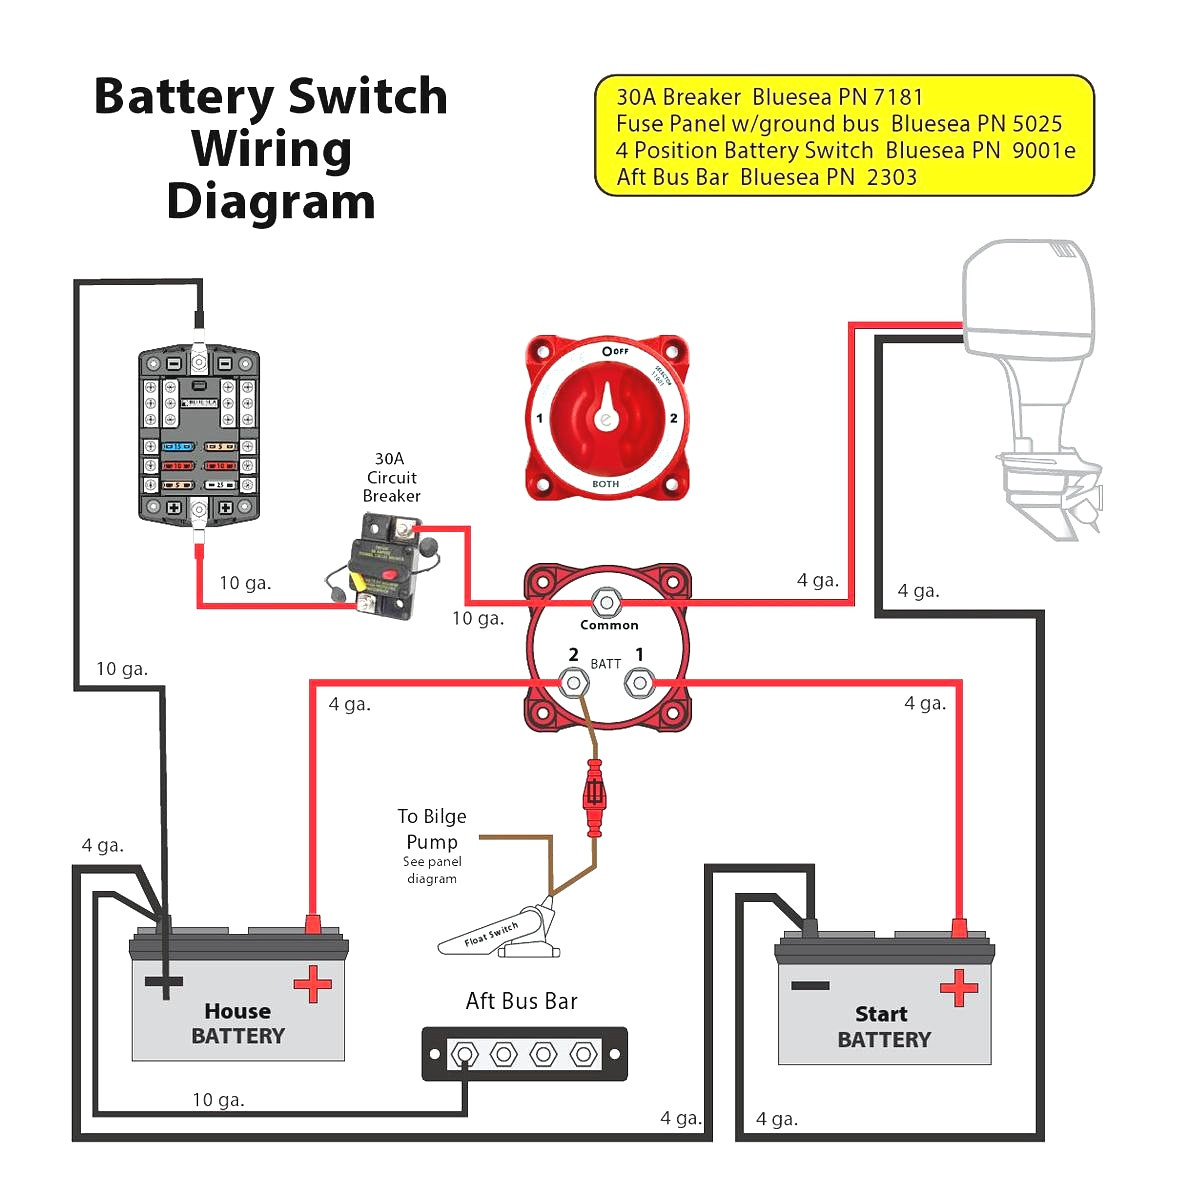 Battery Wire Diagrams | Wiring Diagram - Dual Alternator Wiring Diagram